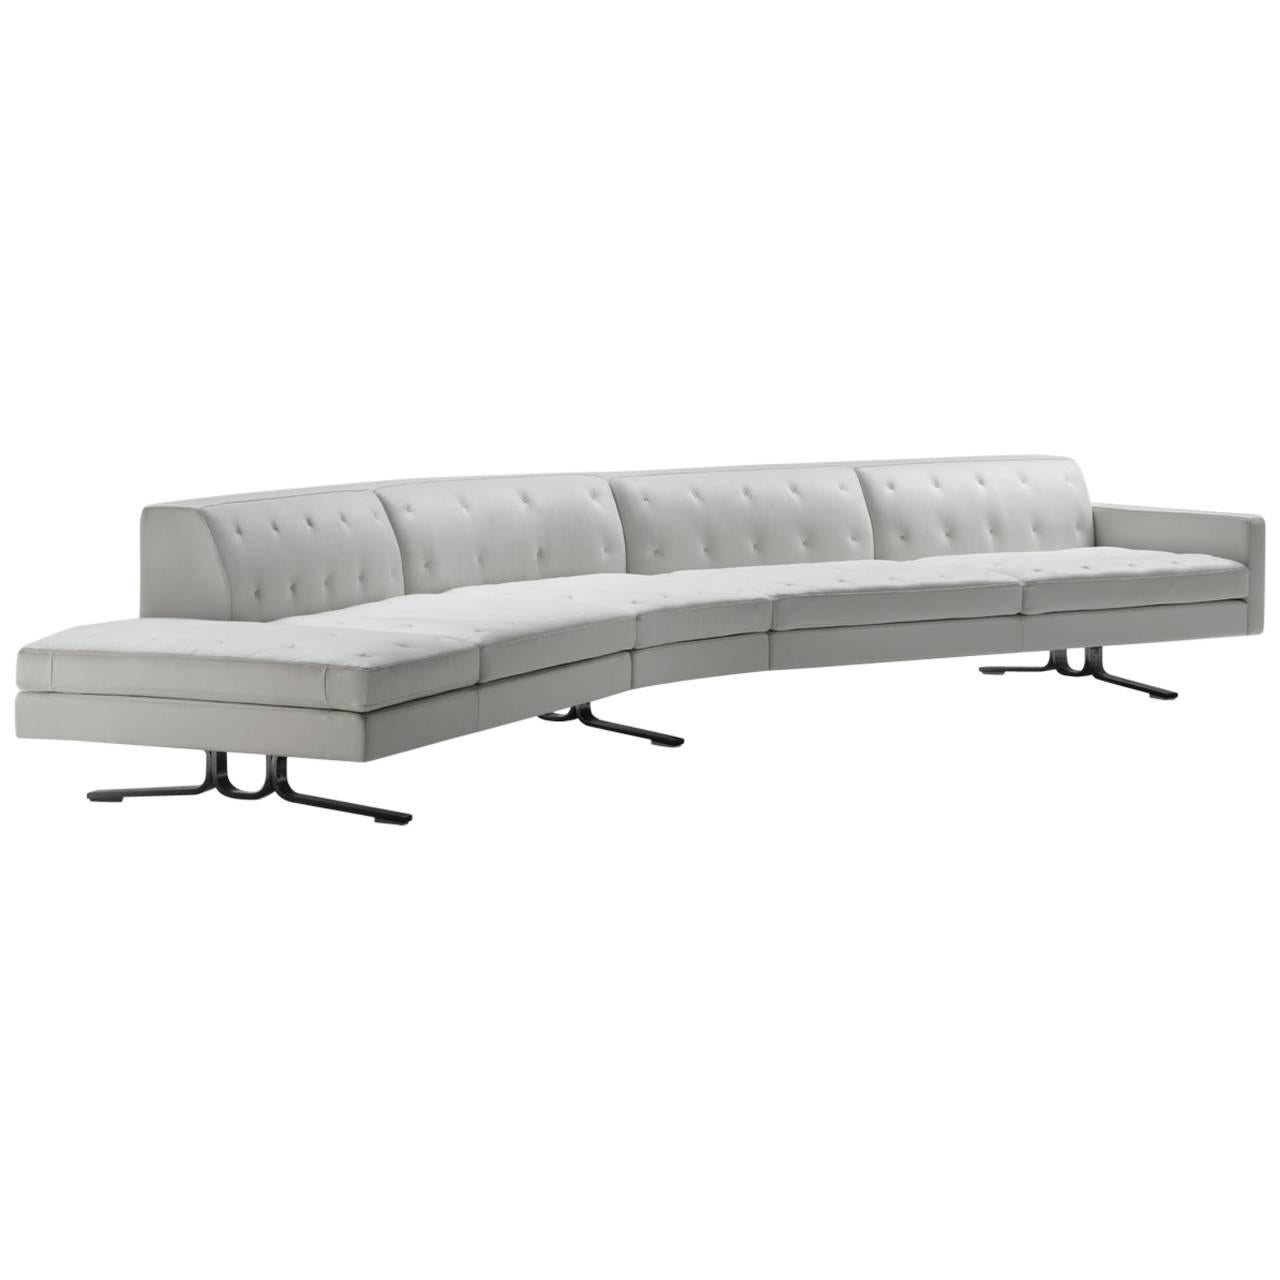 Impressive Sectional Sofa by Jean-Marie Massaud for Poltrona Frau